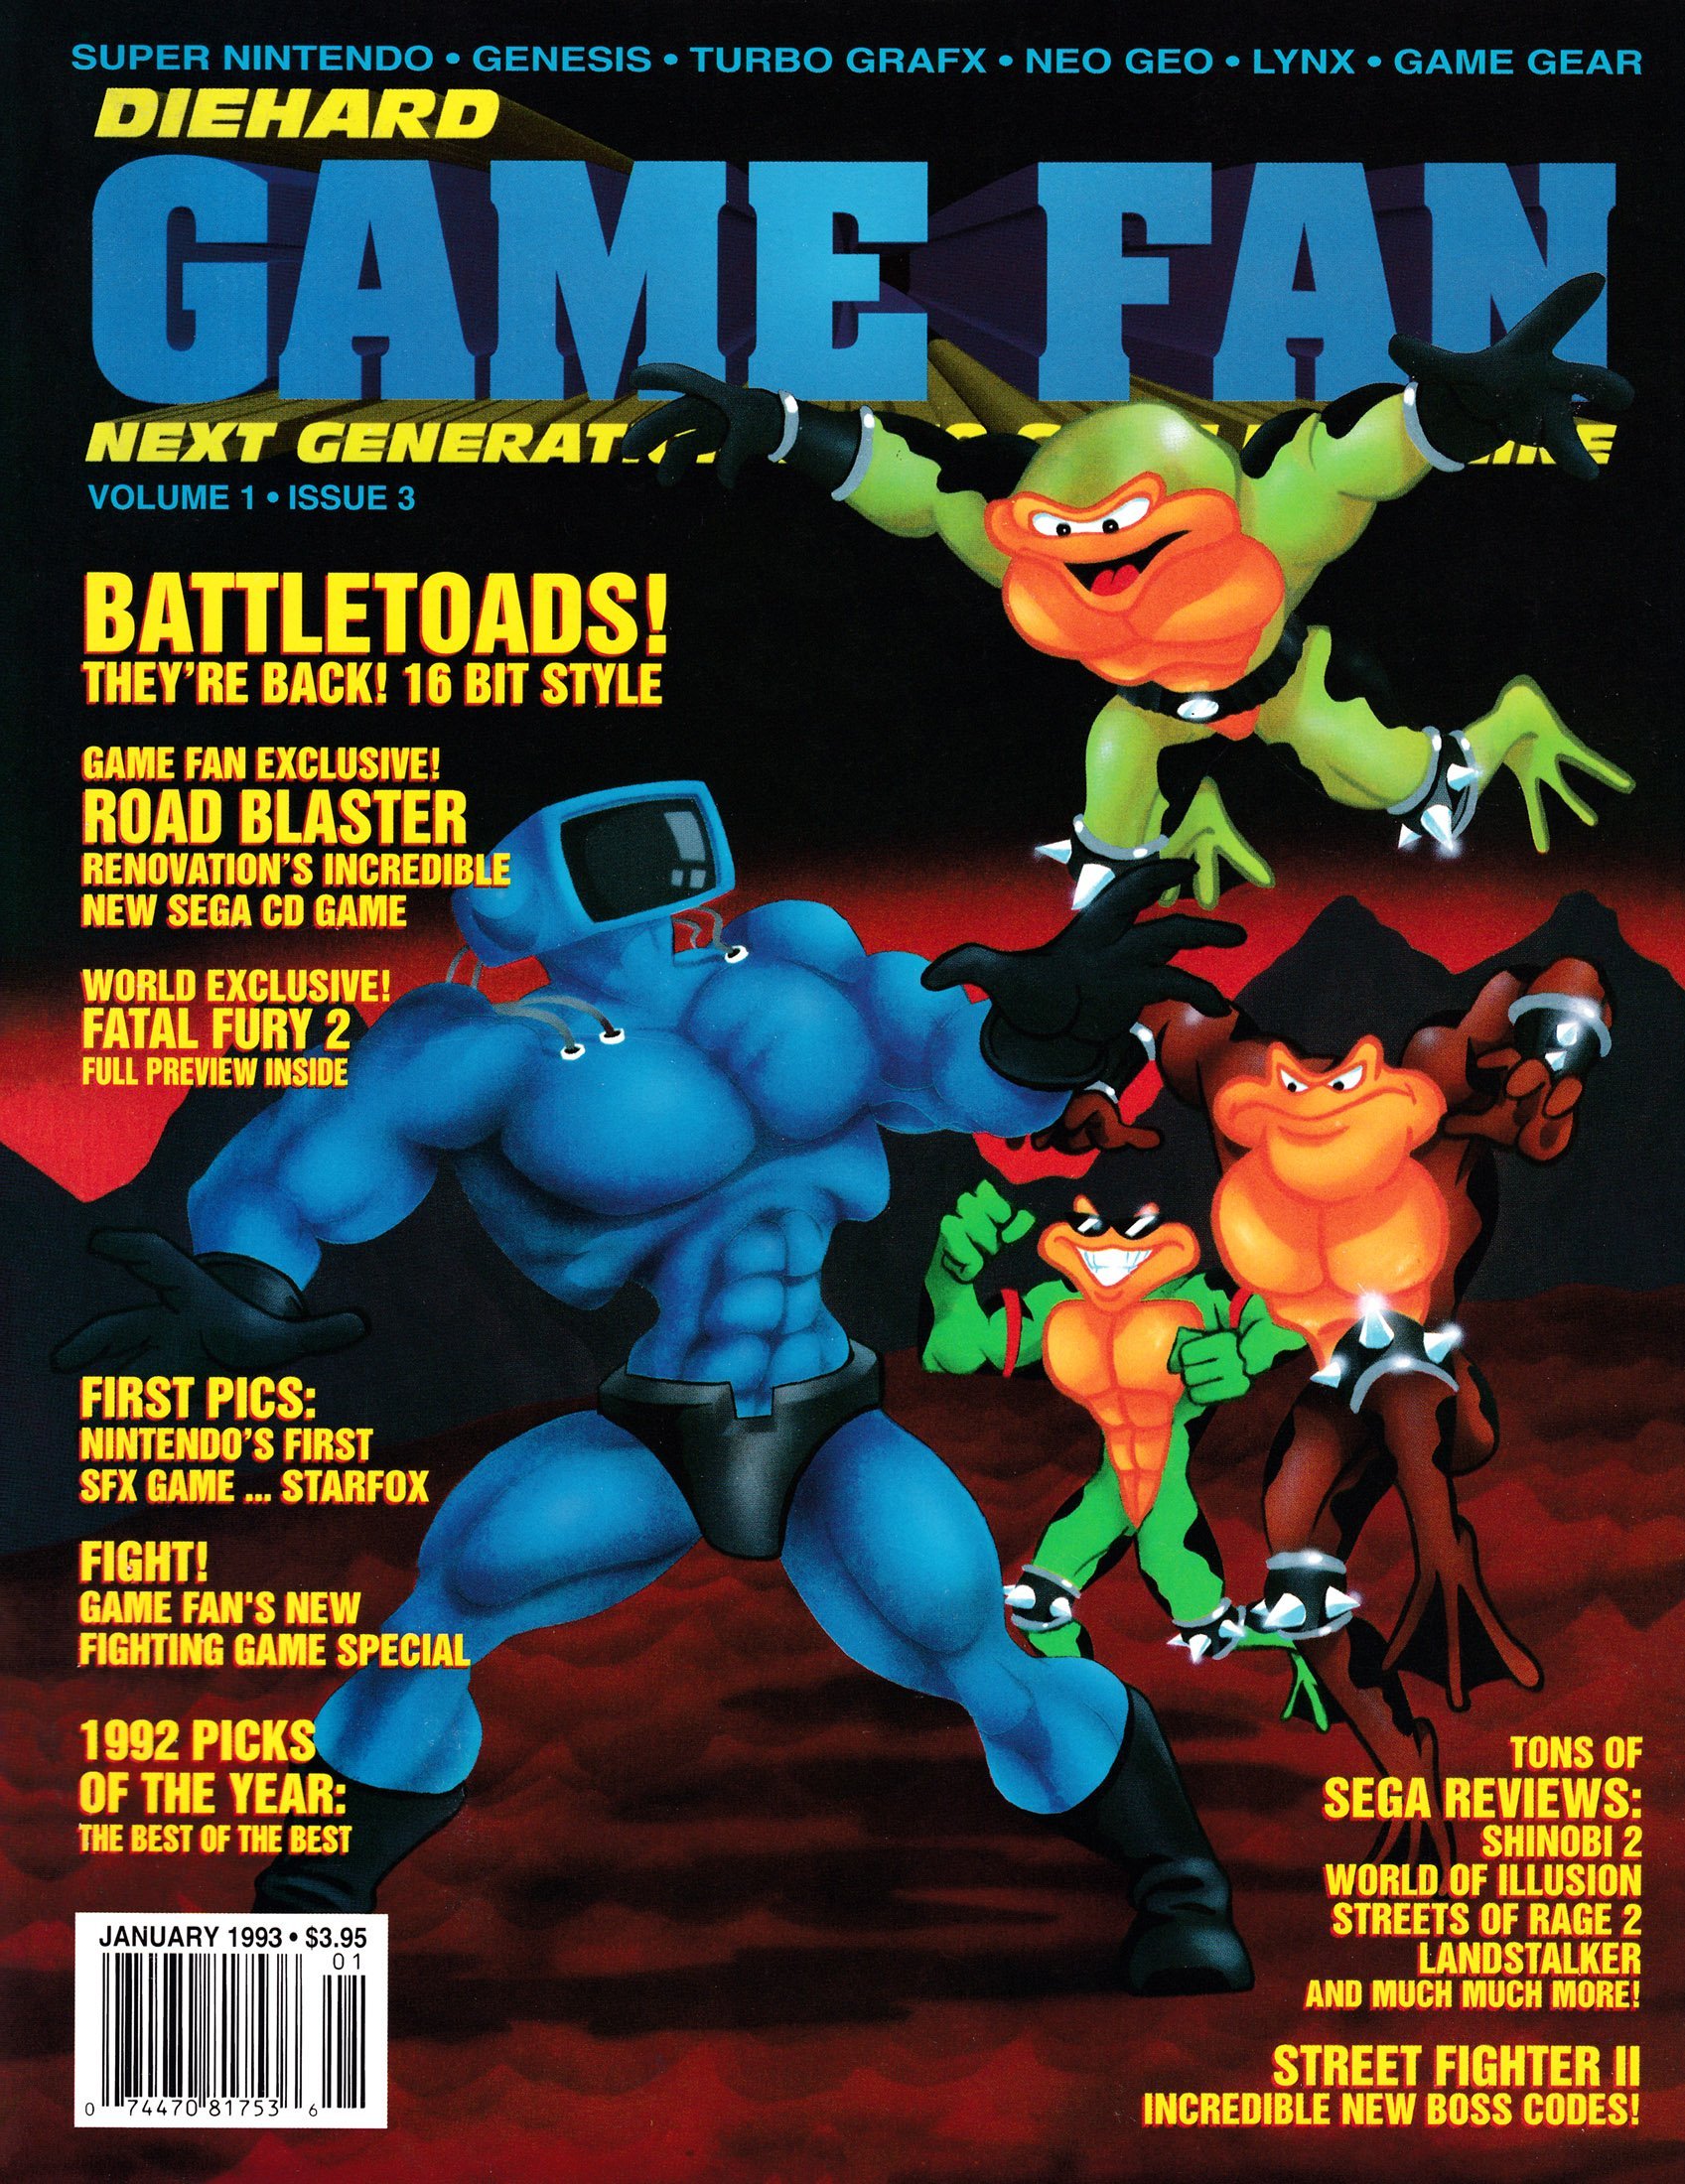 Diehard GameFan Issue 03 January 1993 (Volume 1 Issue 3)